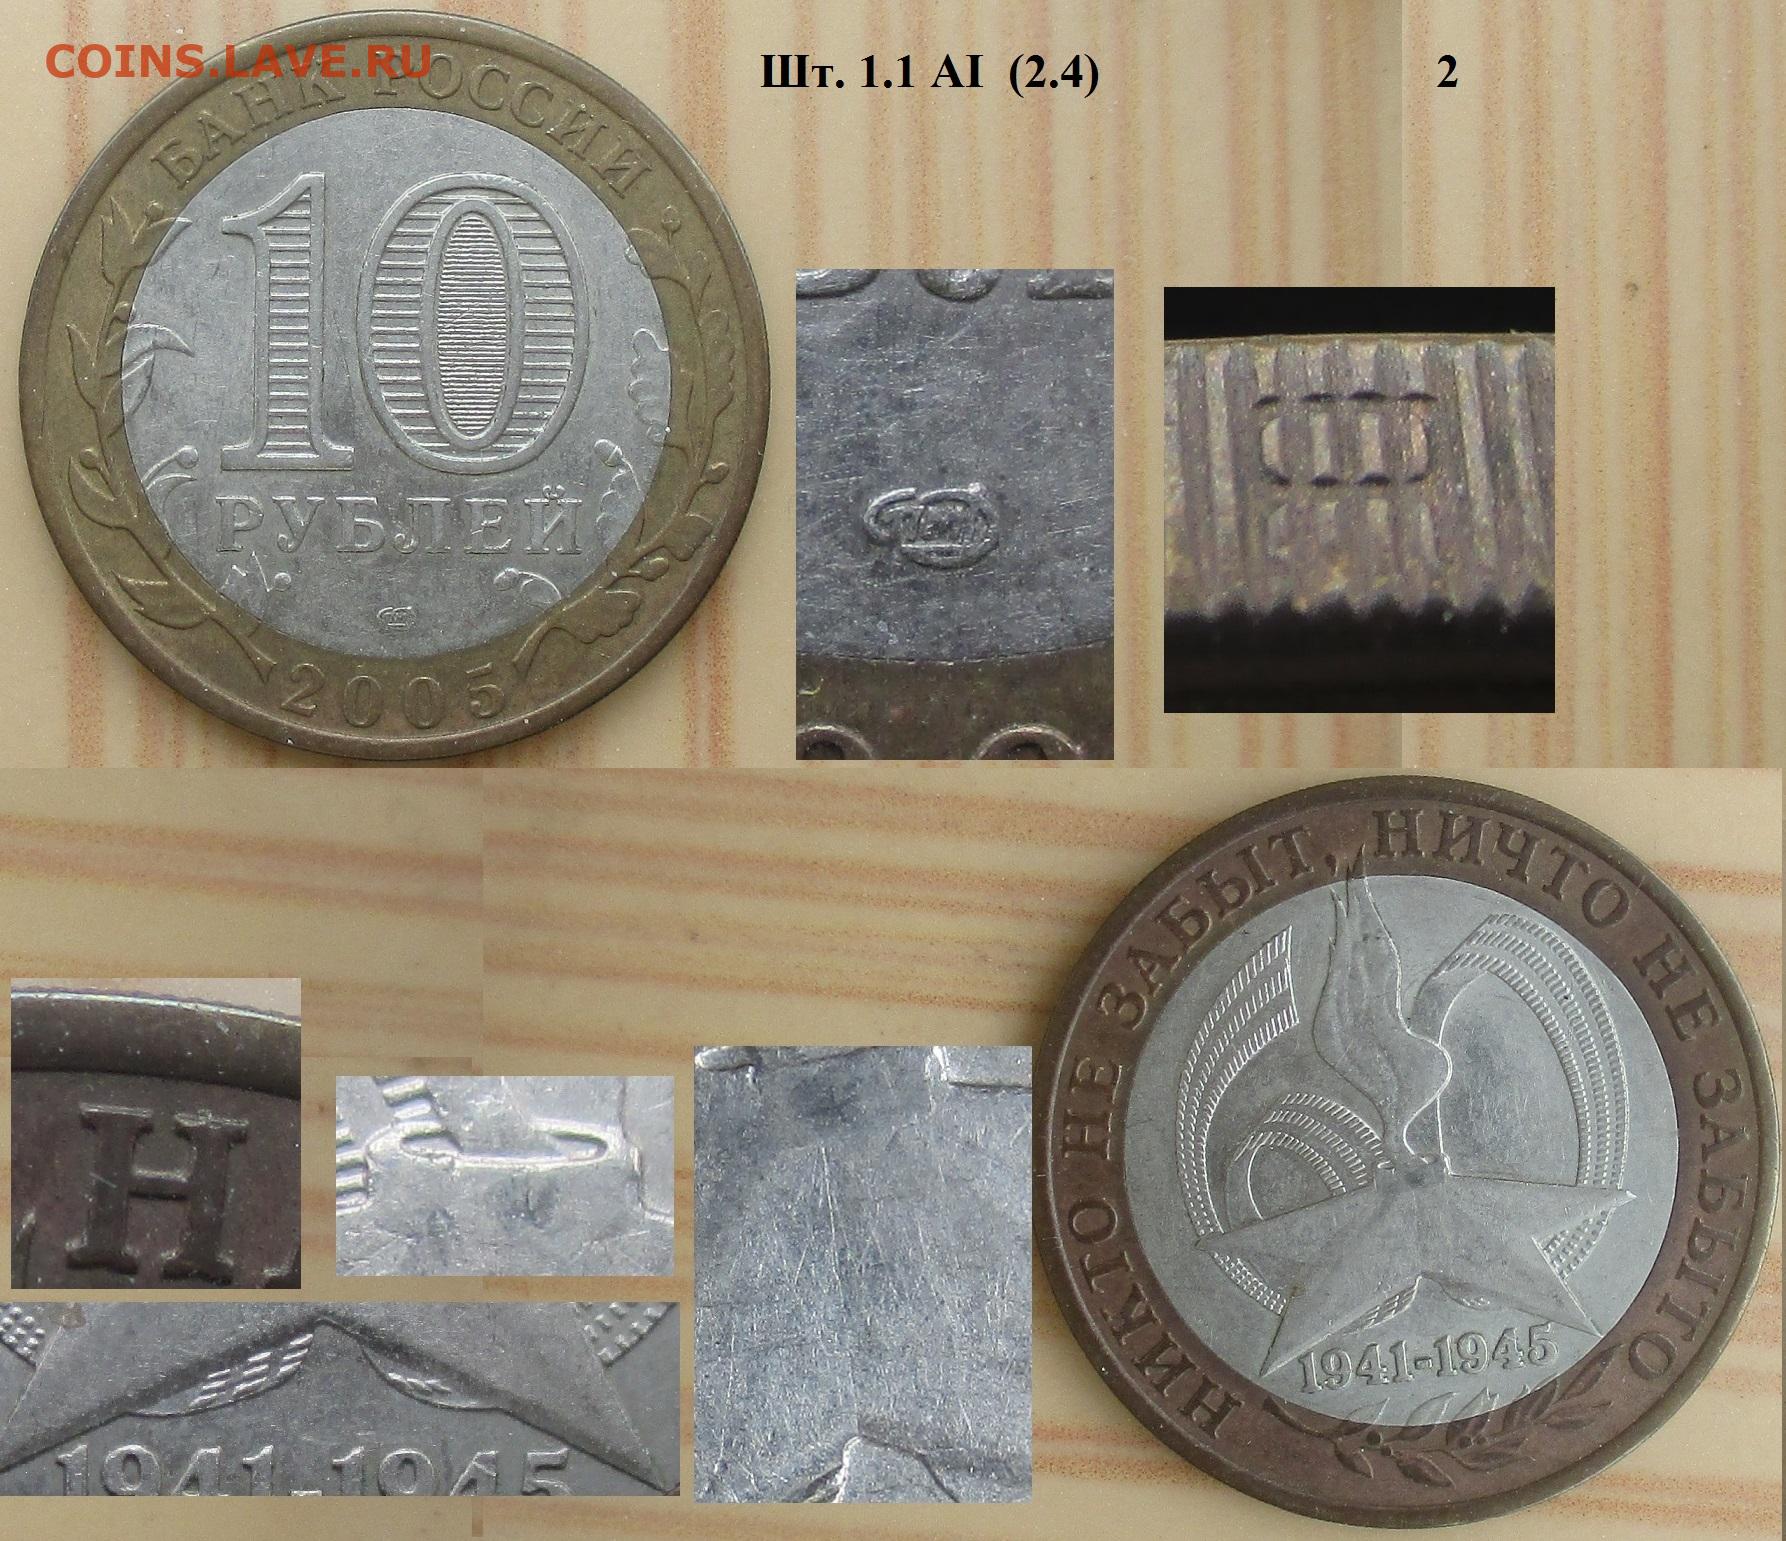 10 рублей никто не забыт 2005 цена. Якутск монета.